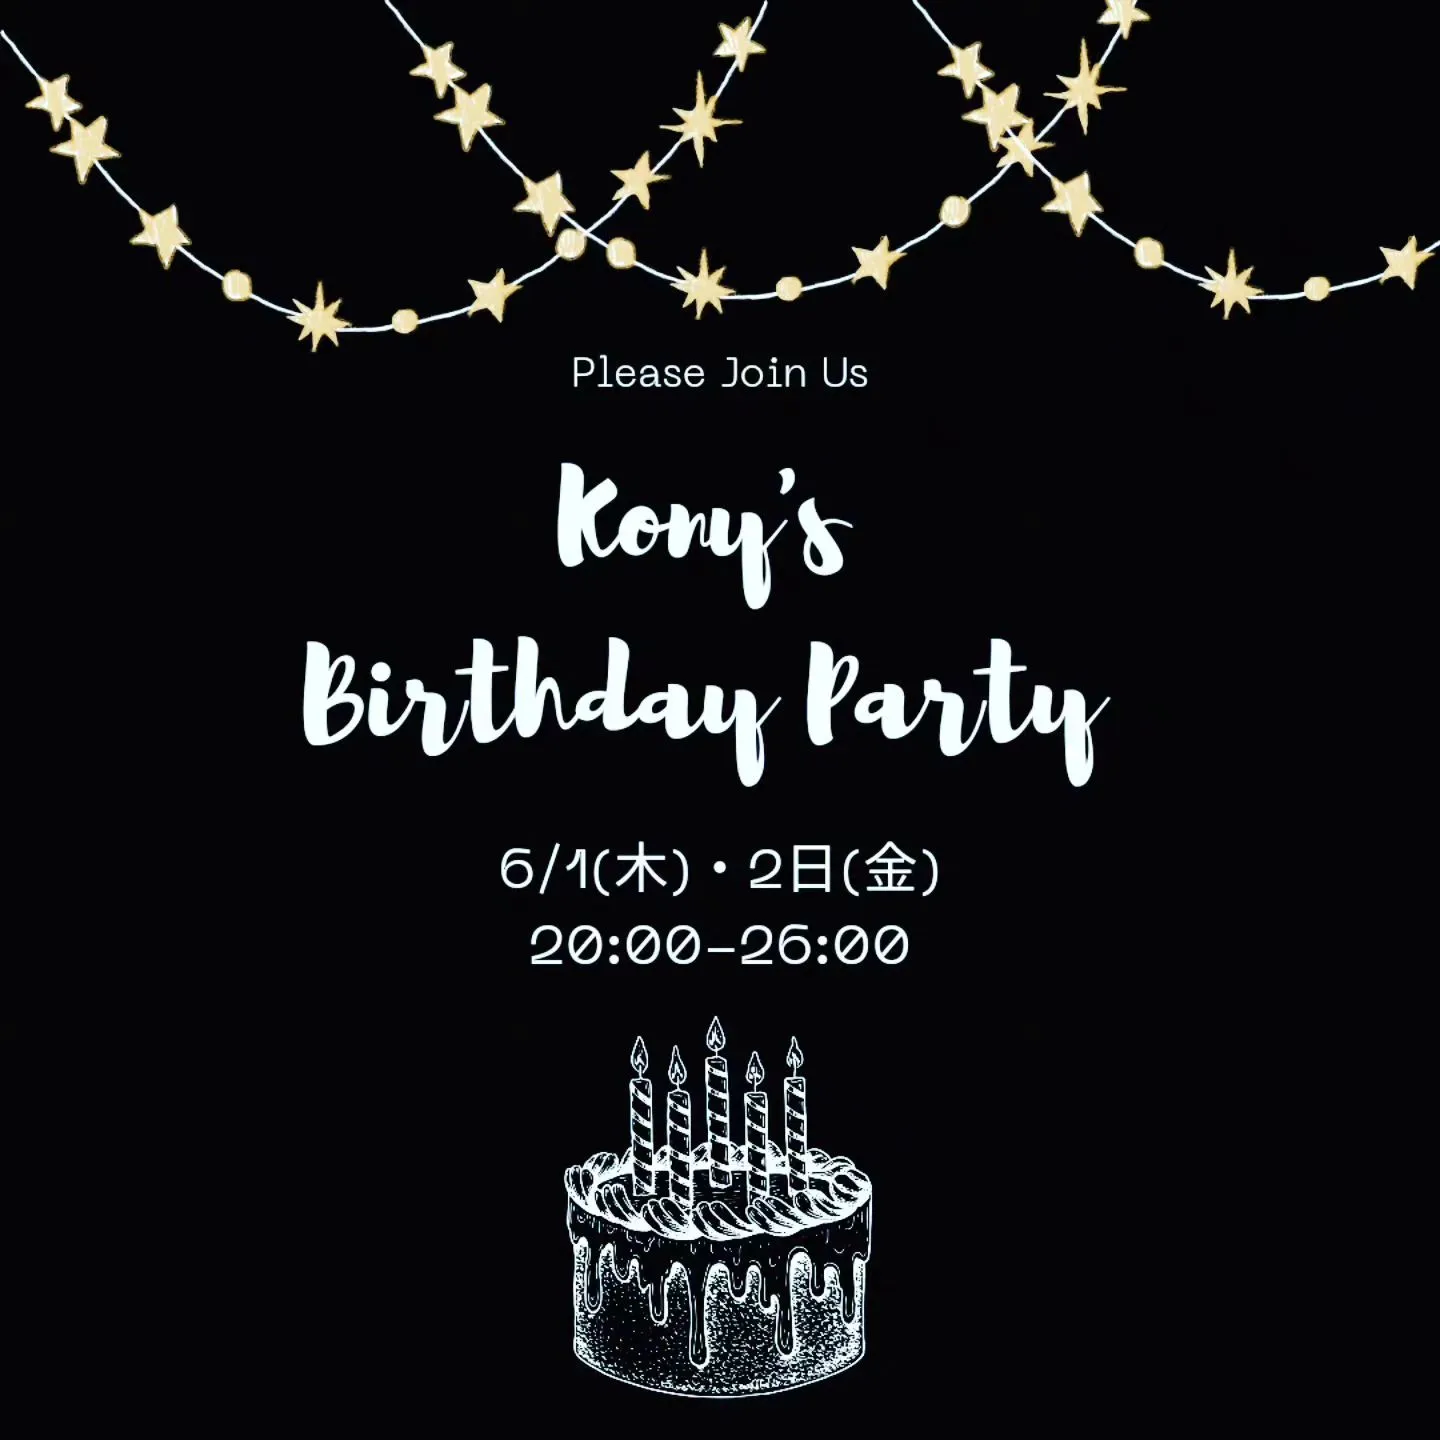 Kony's Birthday Party